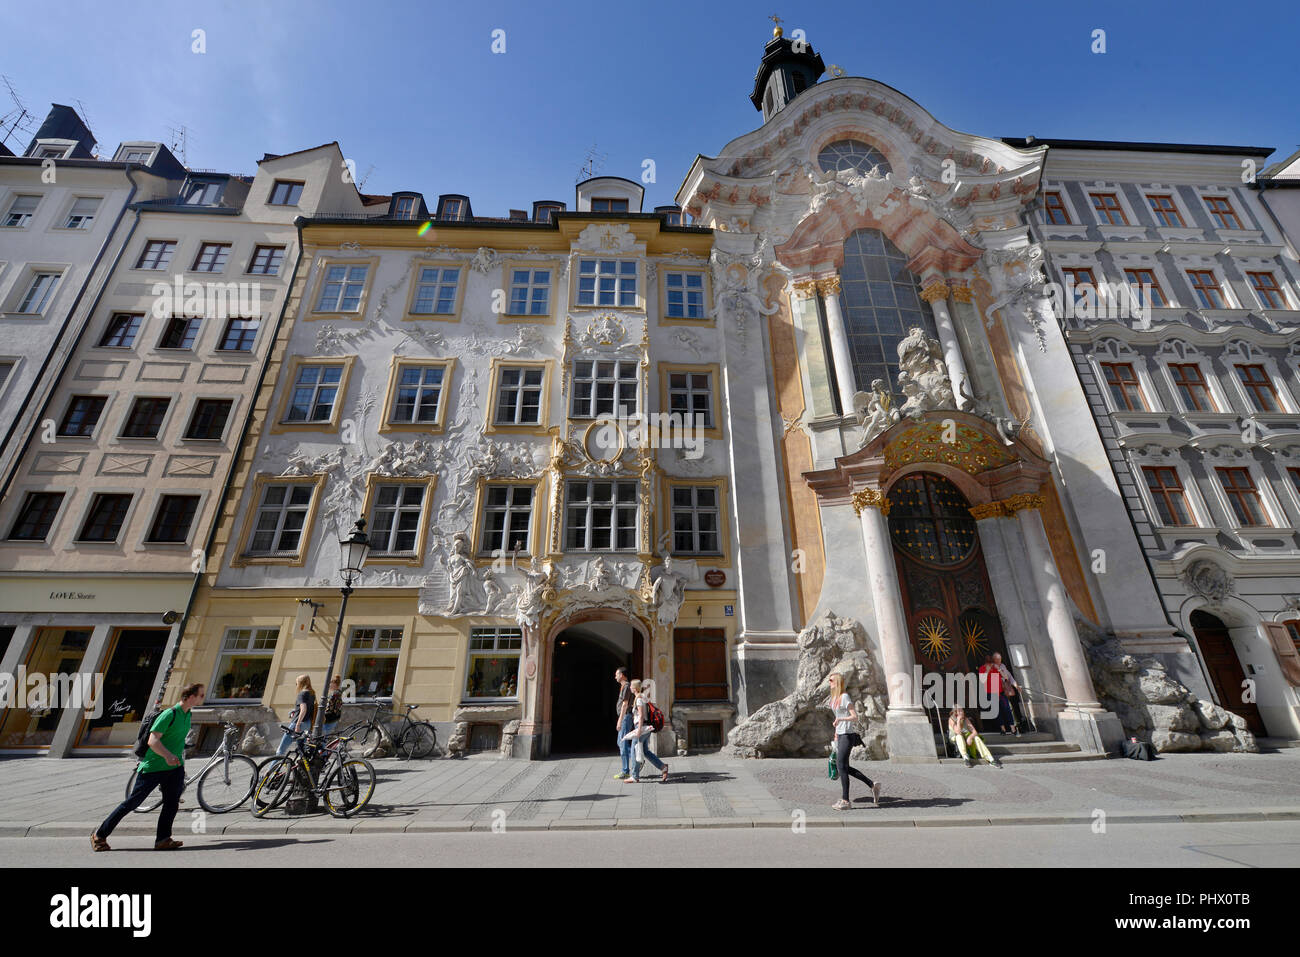 Asamhaus, Asamkirche, Sendlinger Strasse, Monaco di Baviera, Deutschland Foto Stock